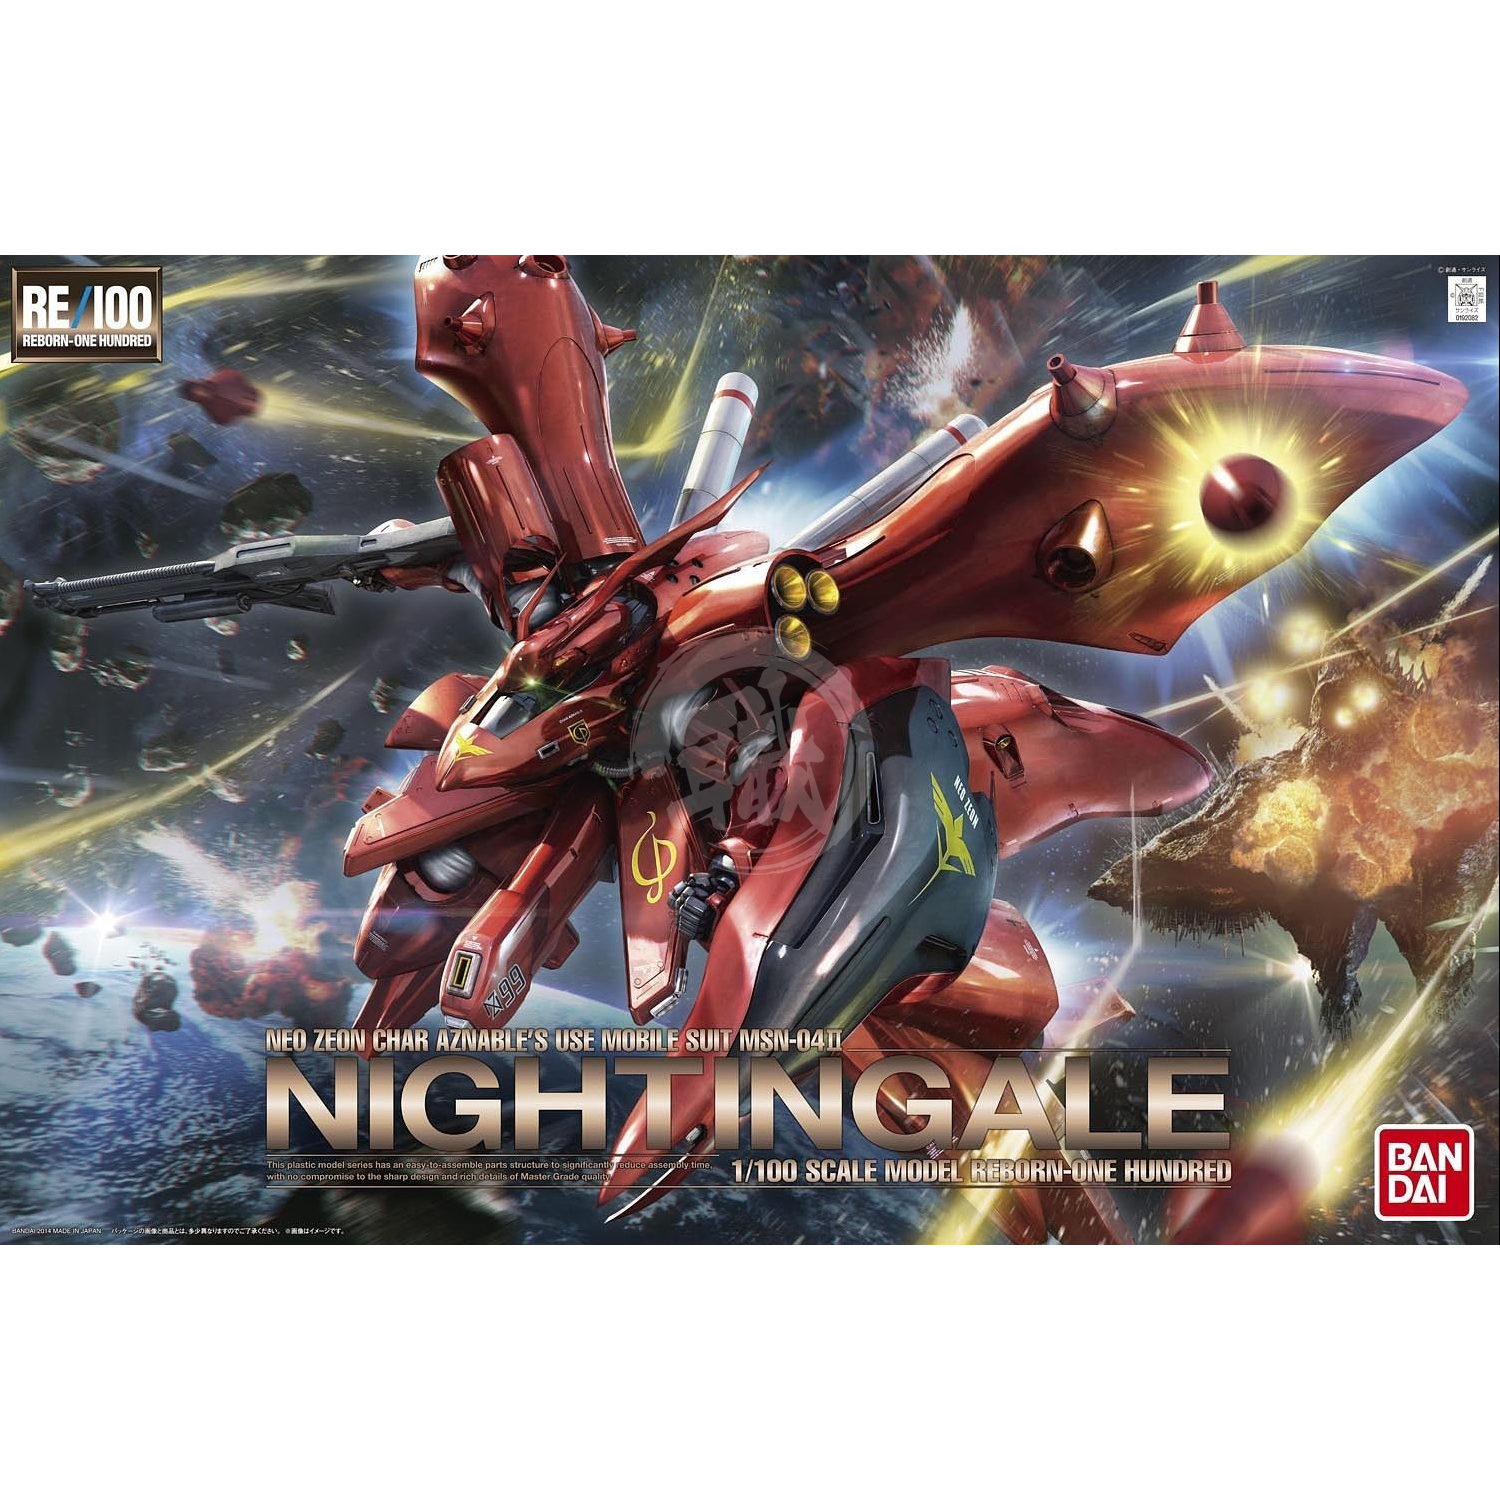 RE/100 Nightingale